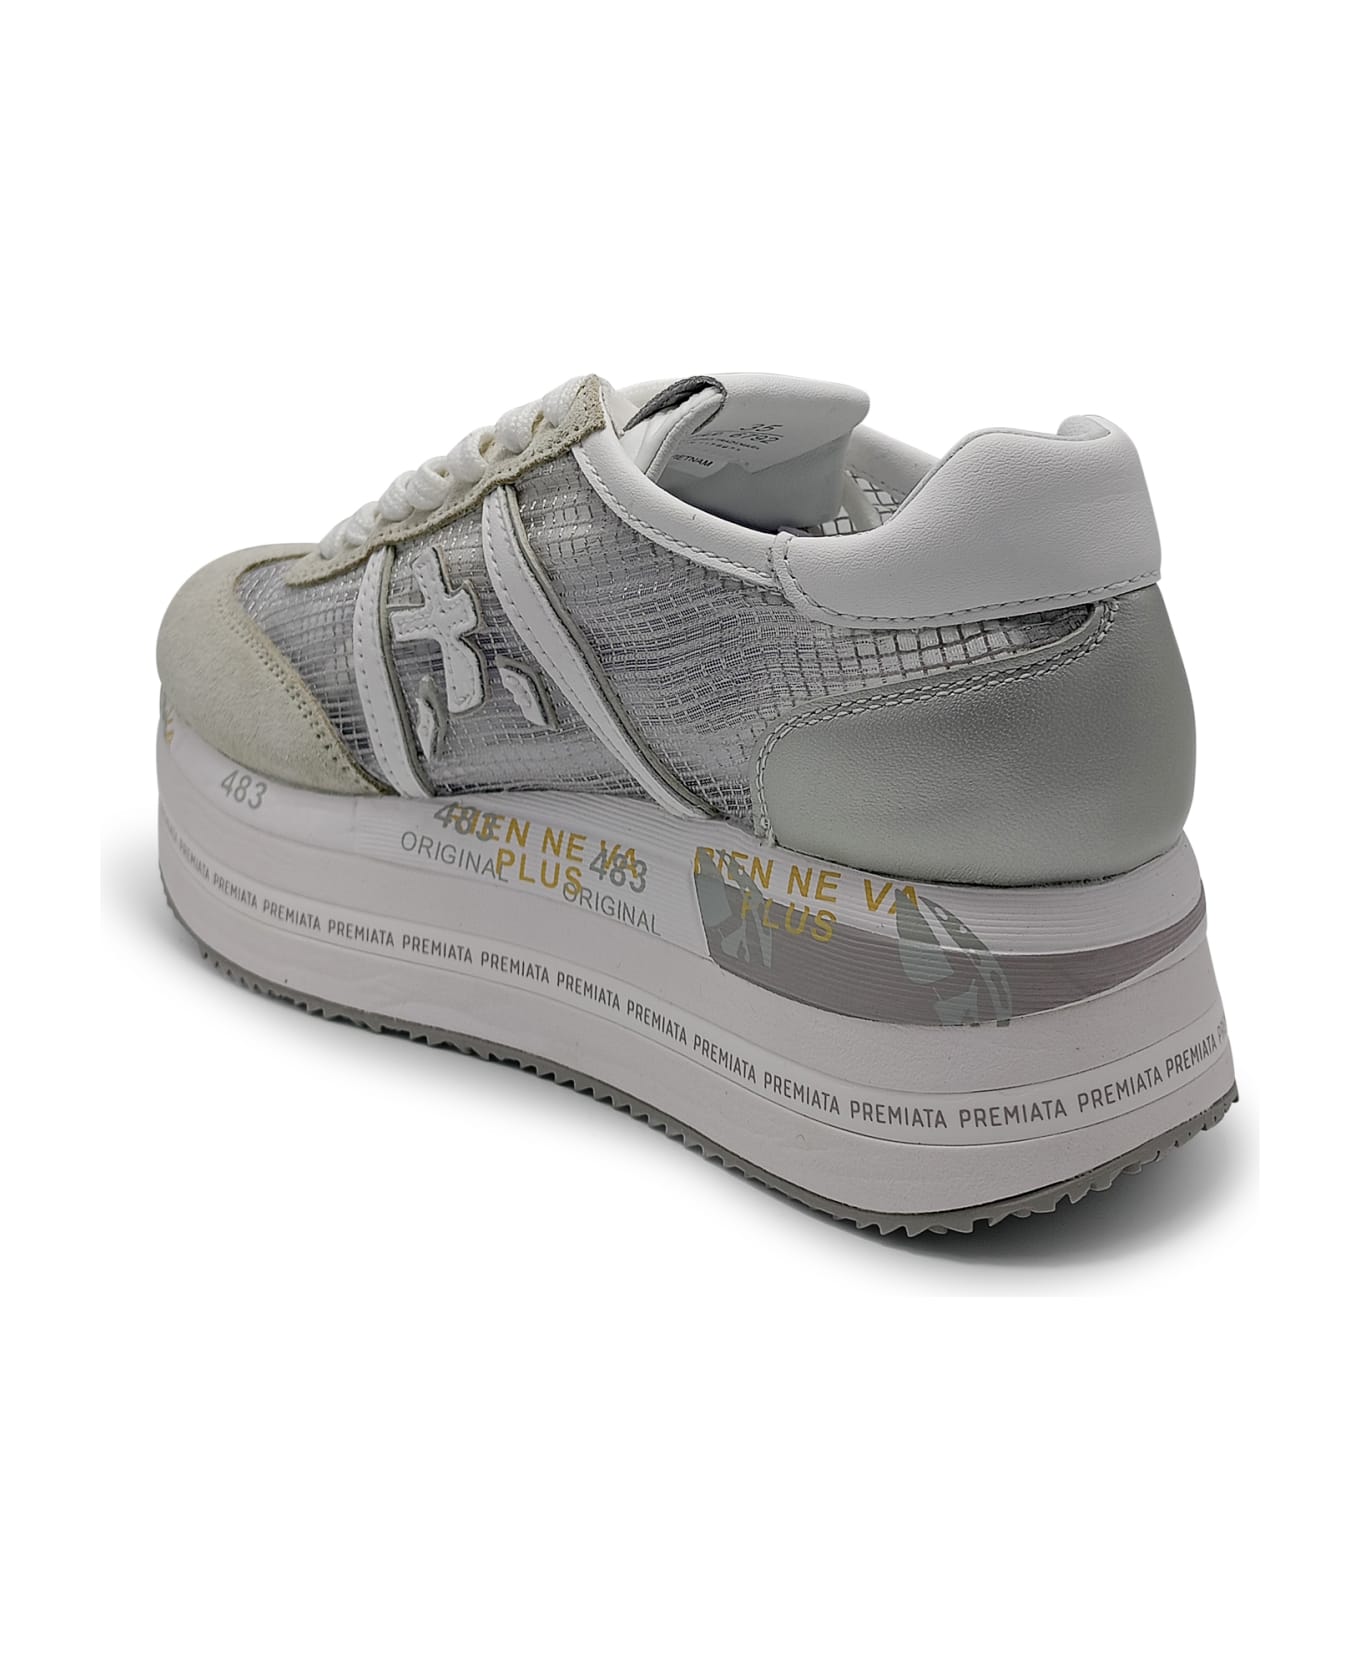 Premiata Beth Sneakers With Logo Application - Grey